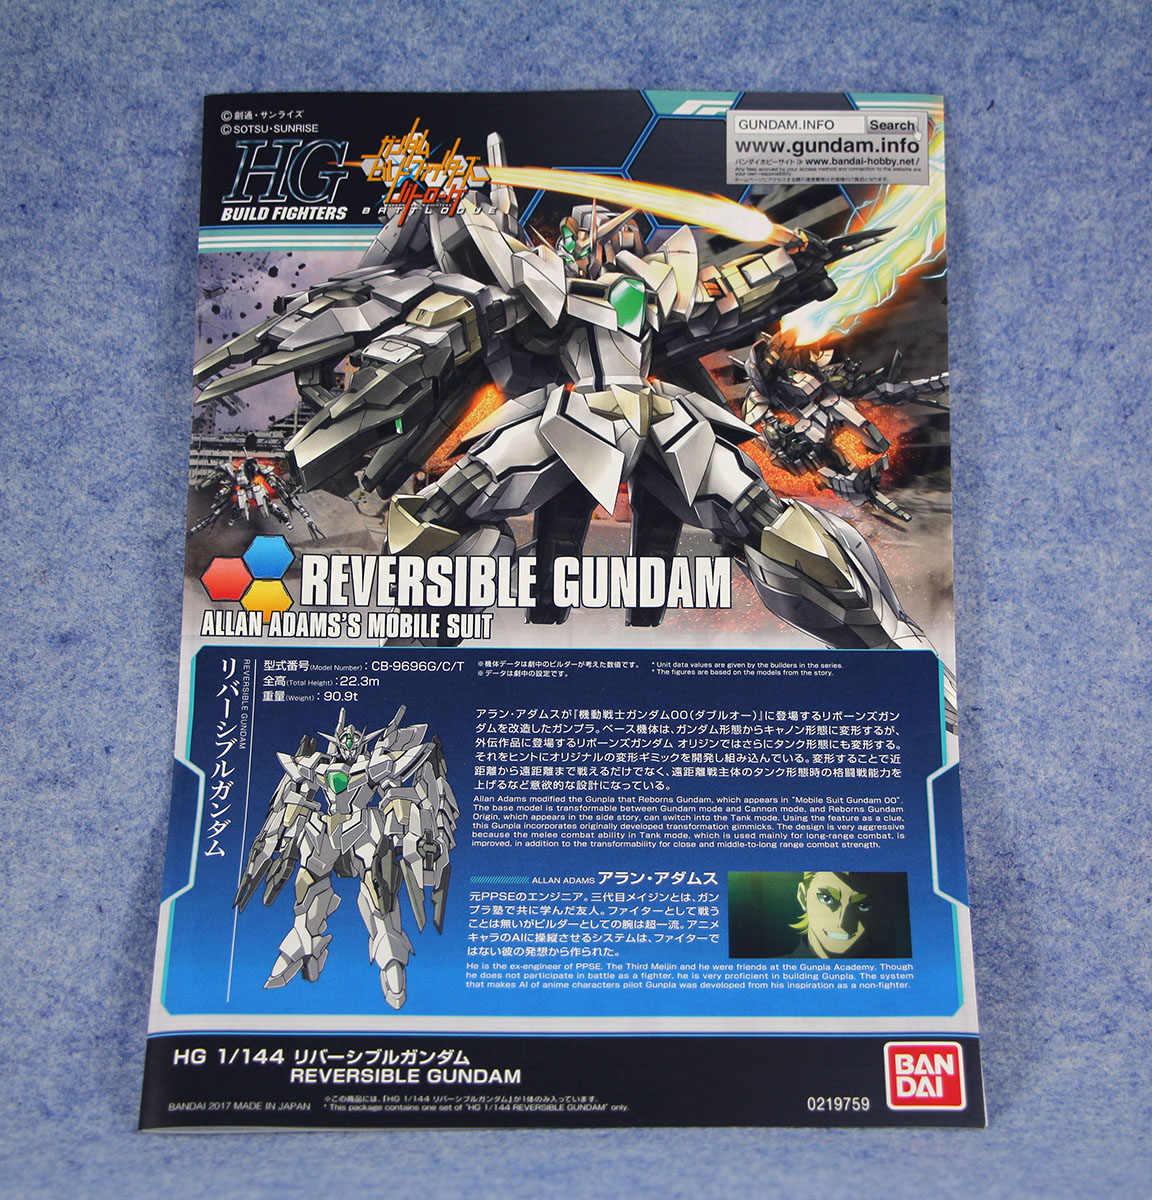 installation manual of HGBF 1/144 Reversible Gundam